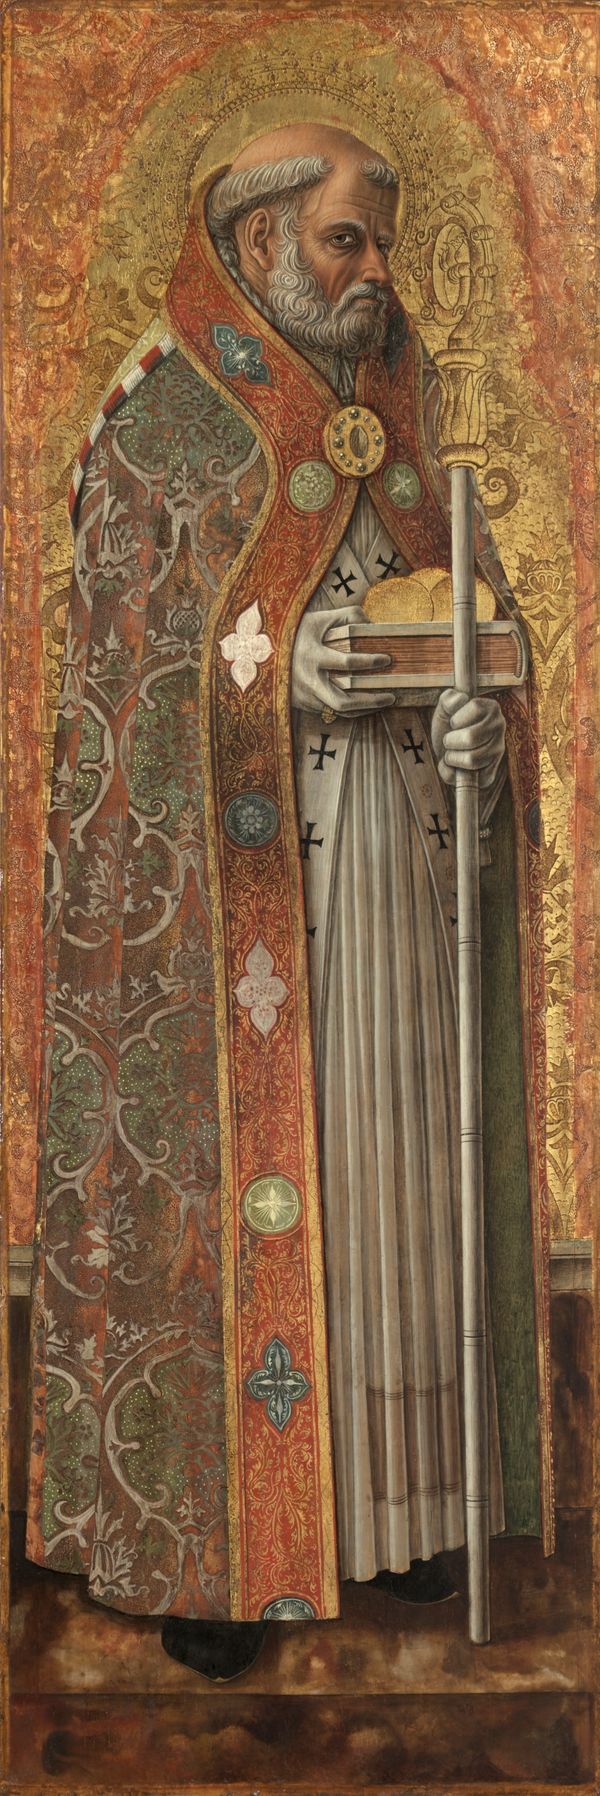 Saint Nicholas of Bari (1472) by Carlo Crivelli - Public Domain